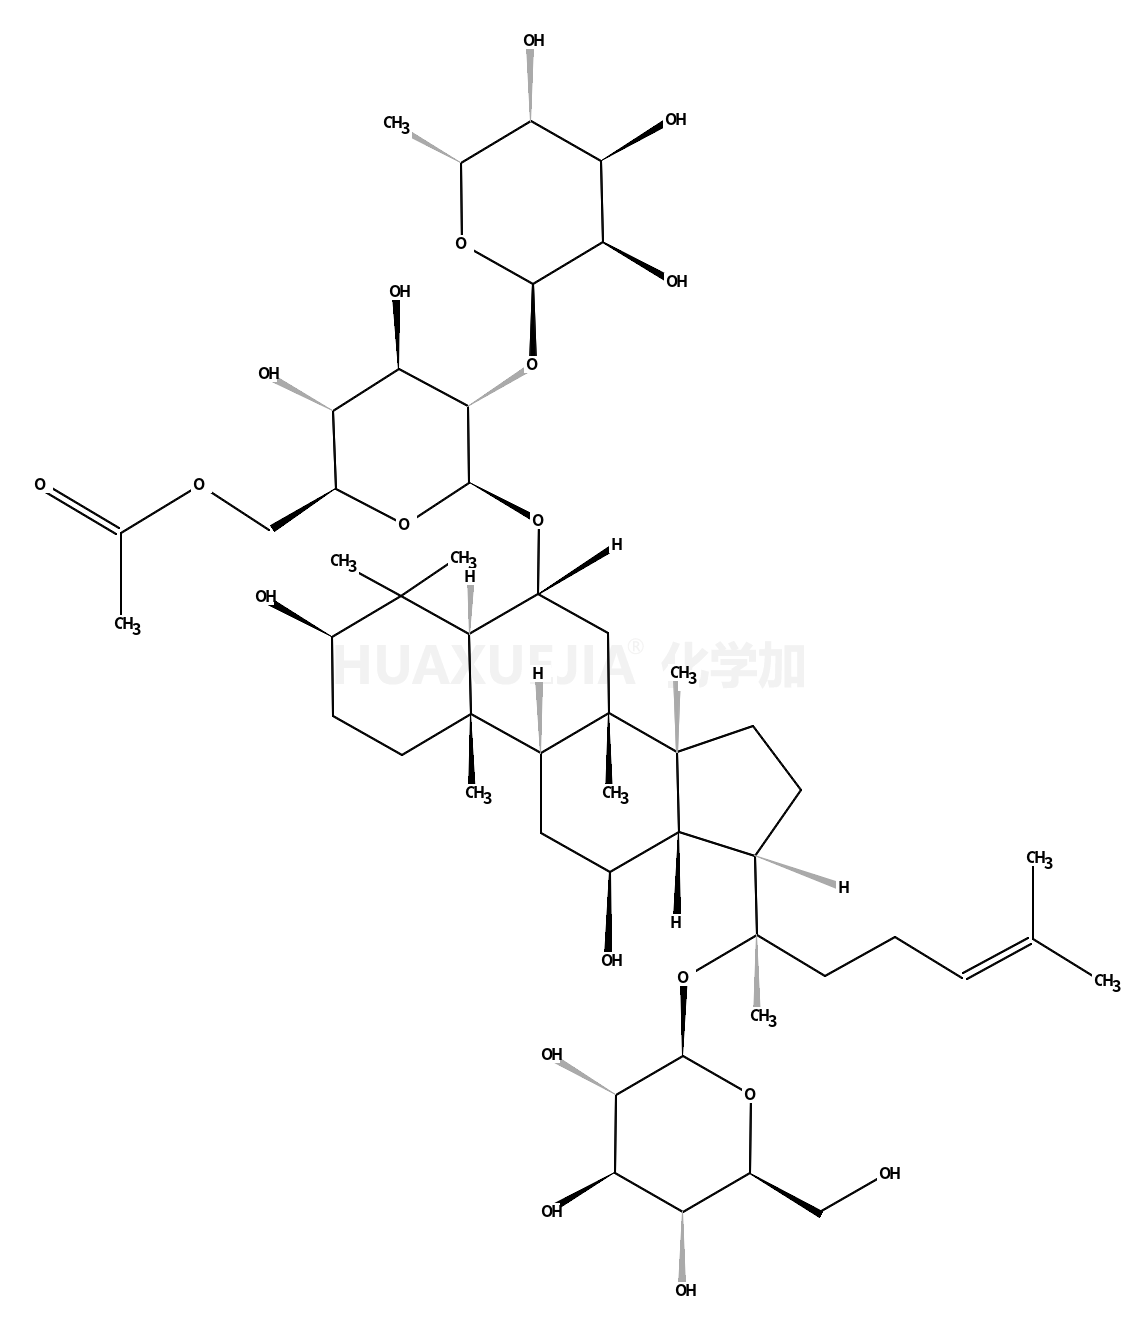 pseudo-ginsenoside-RS1